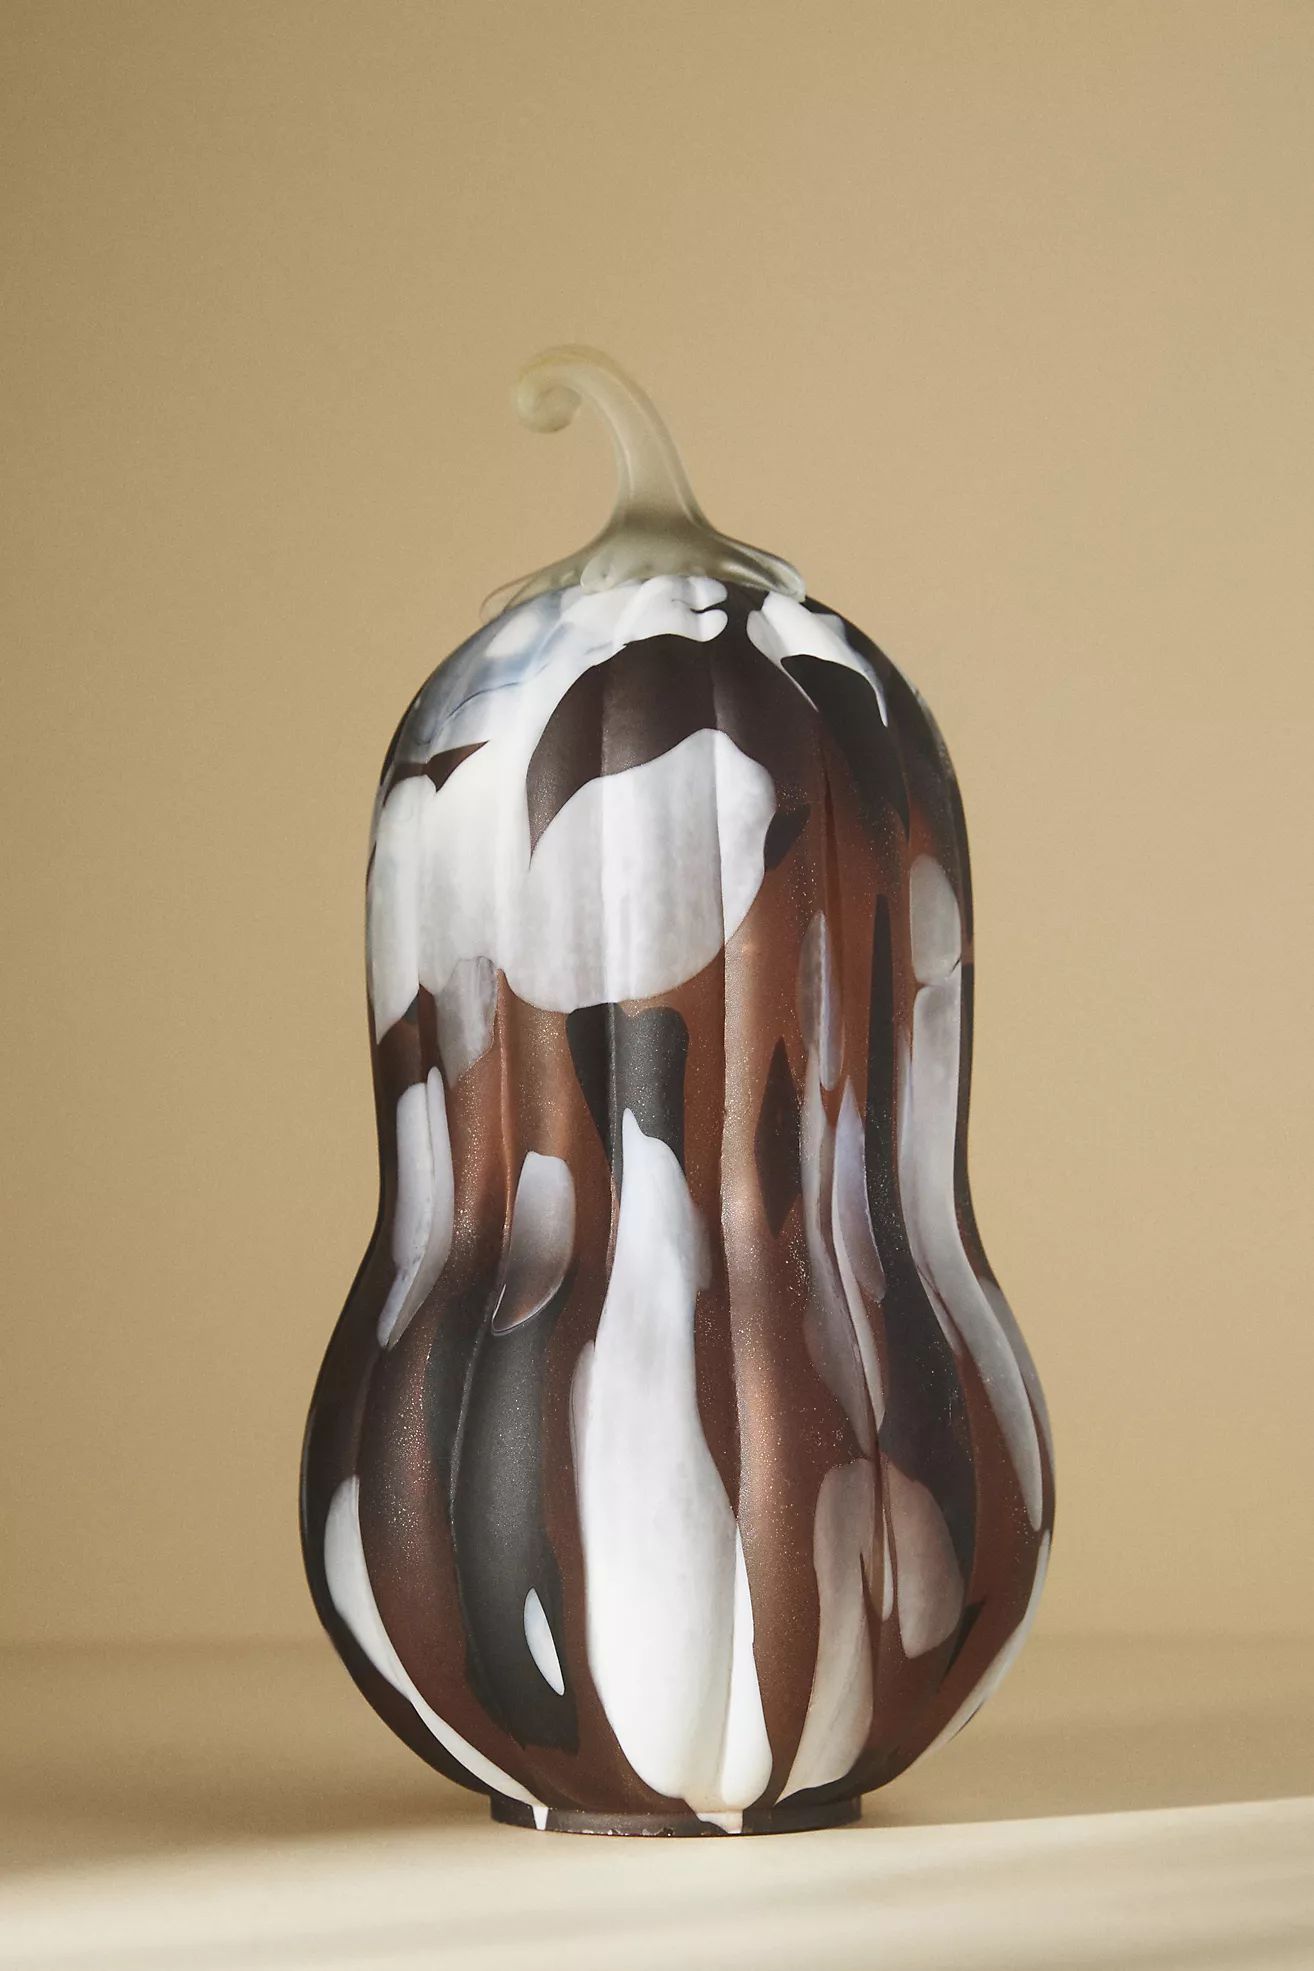 Cheena Glass Pumpkin Decorative Object | Anthropologie (US)